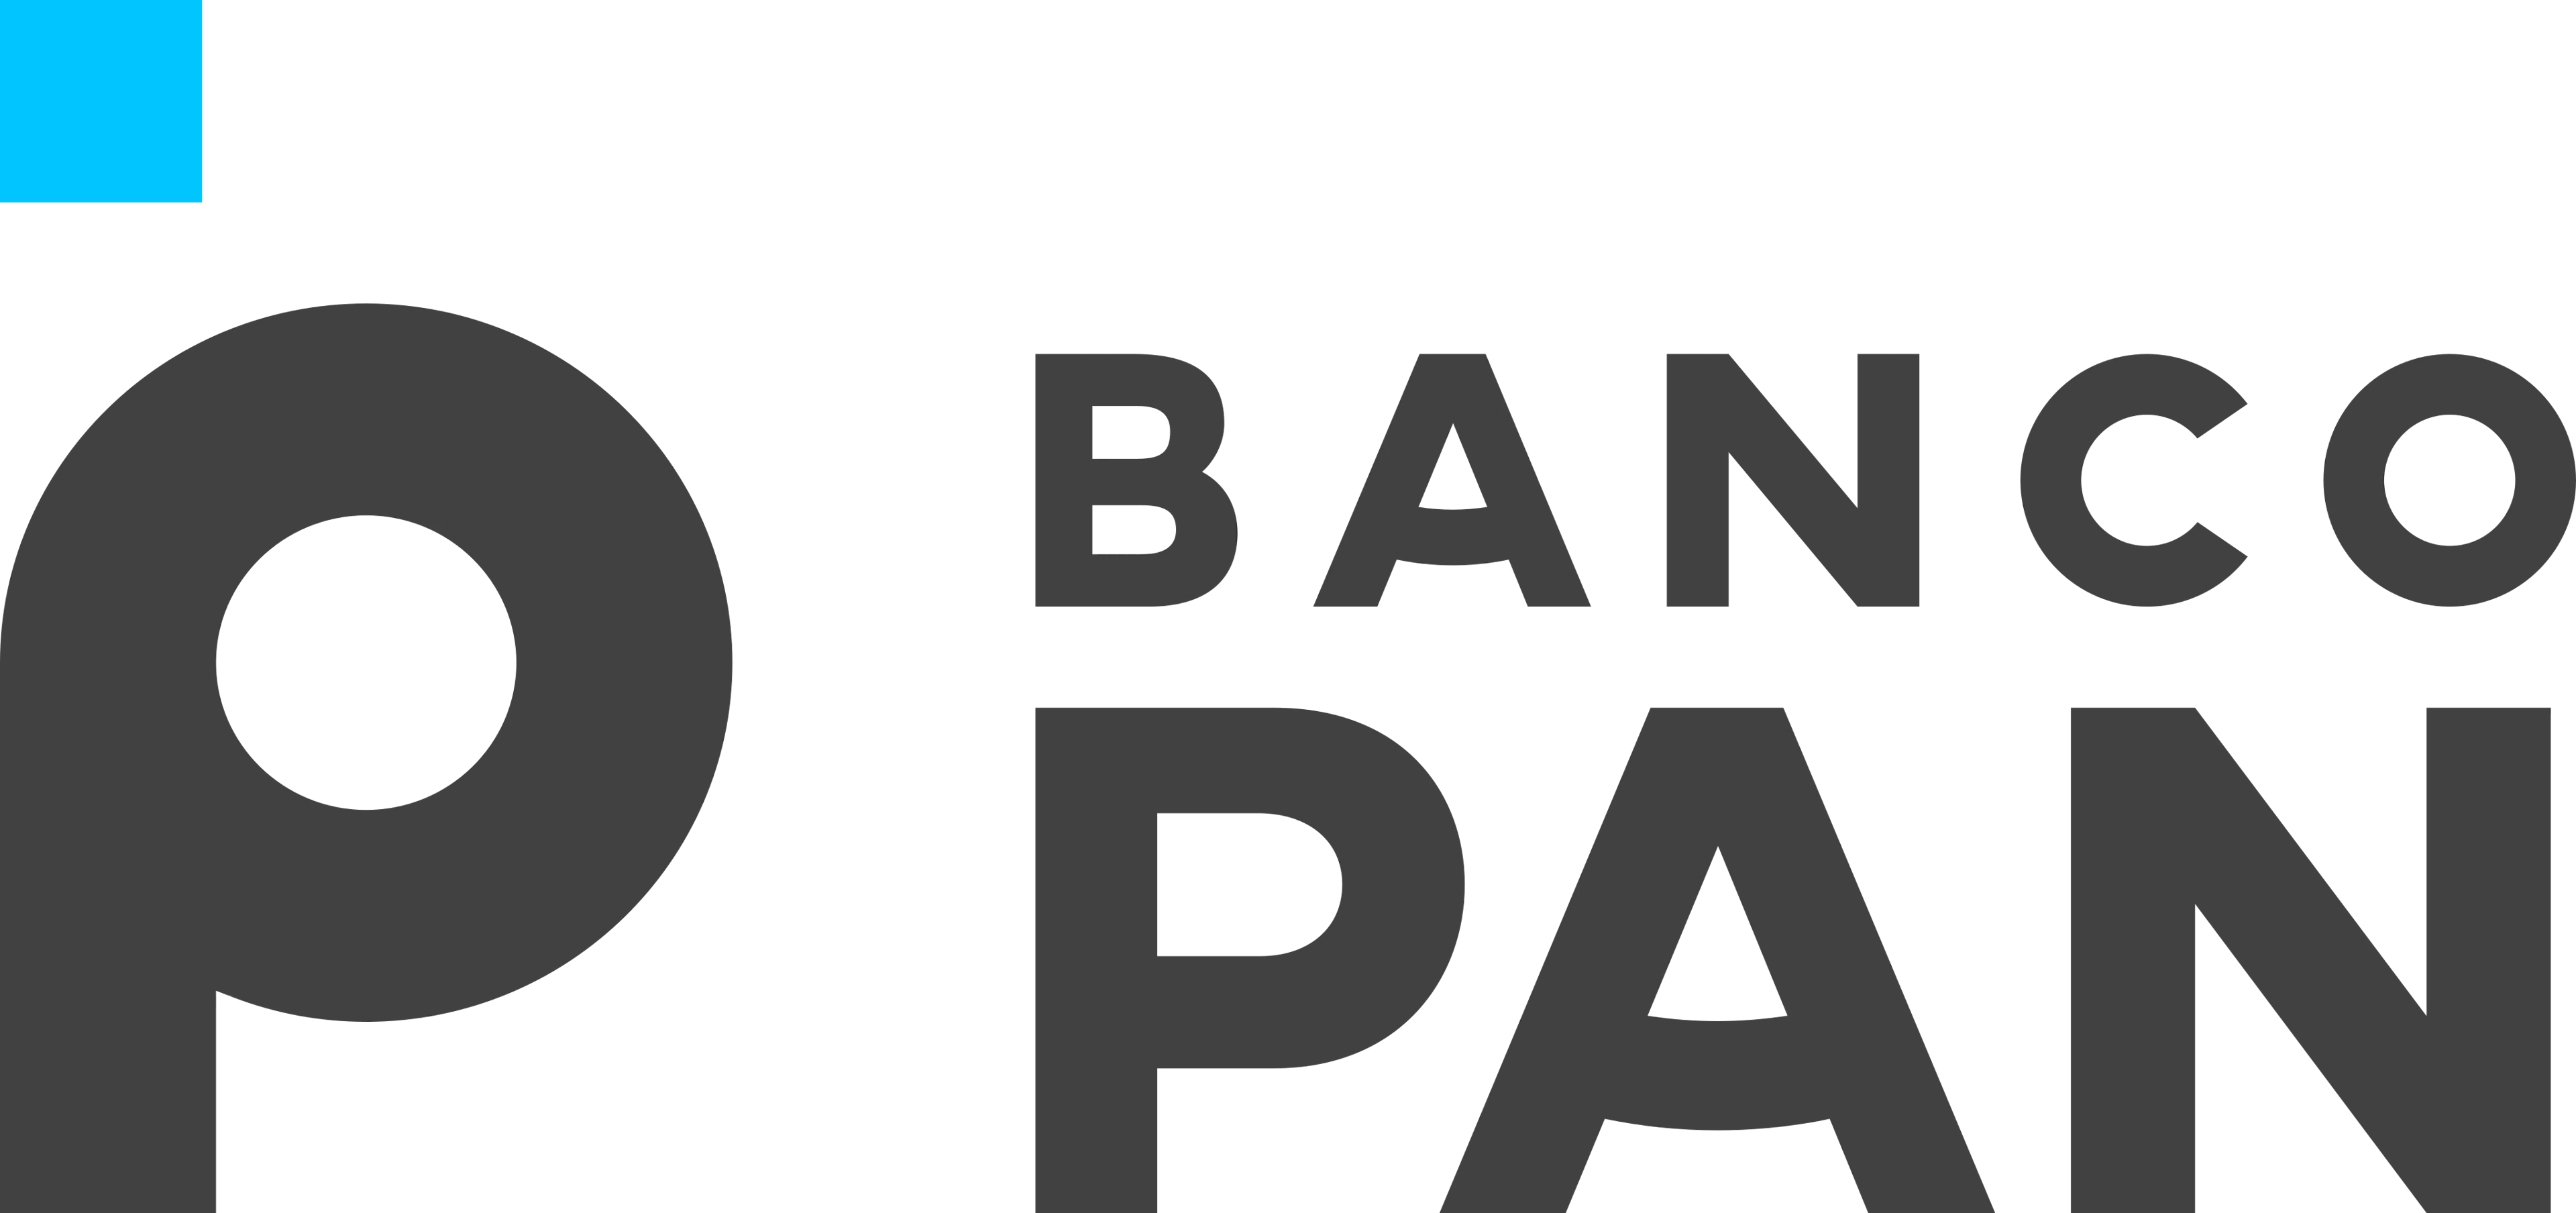 simule taxas do Banco Pan com a Konsi